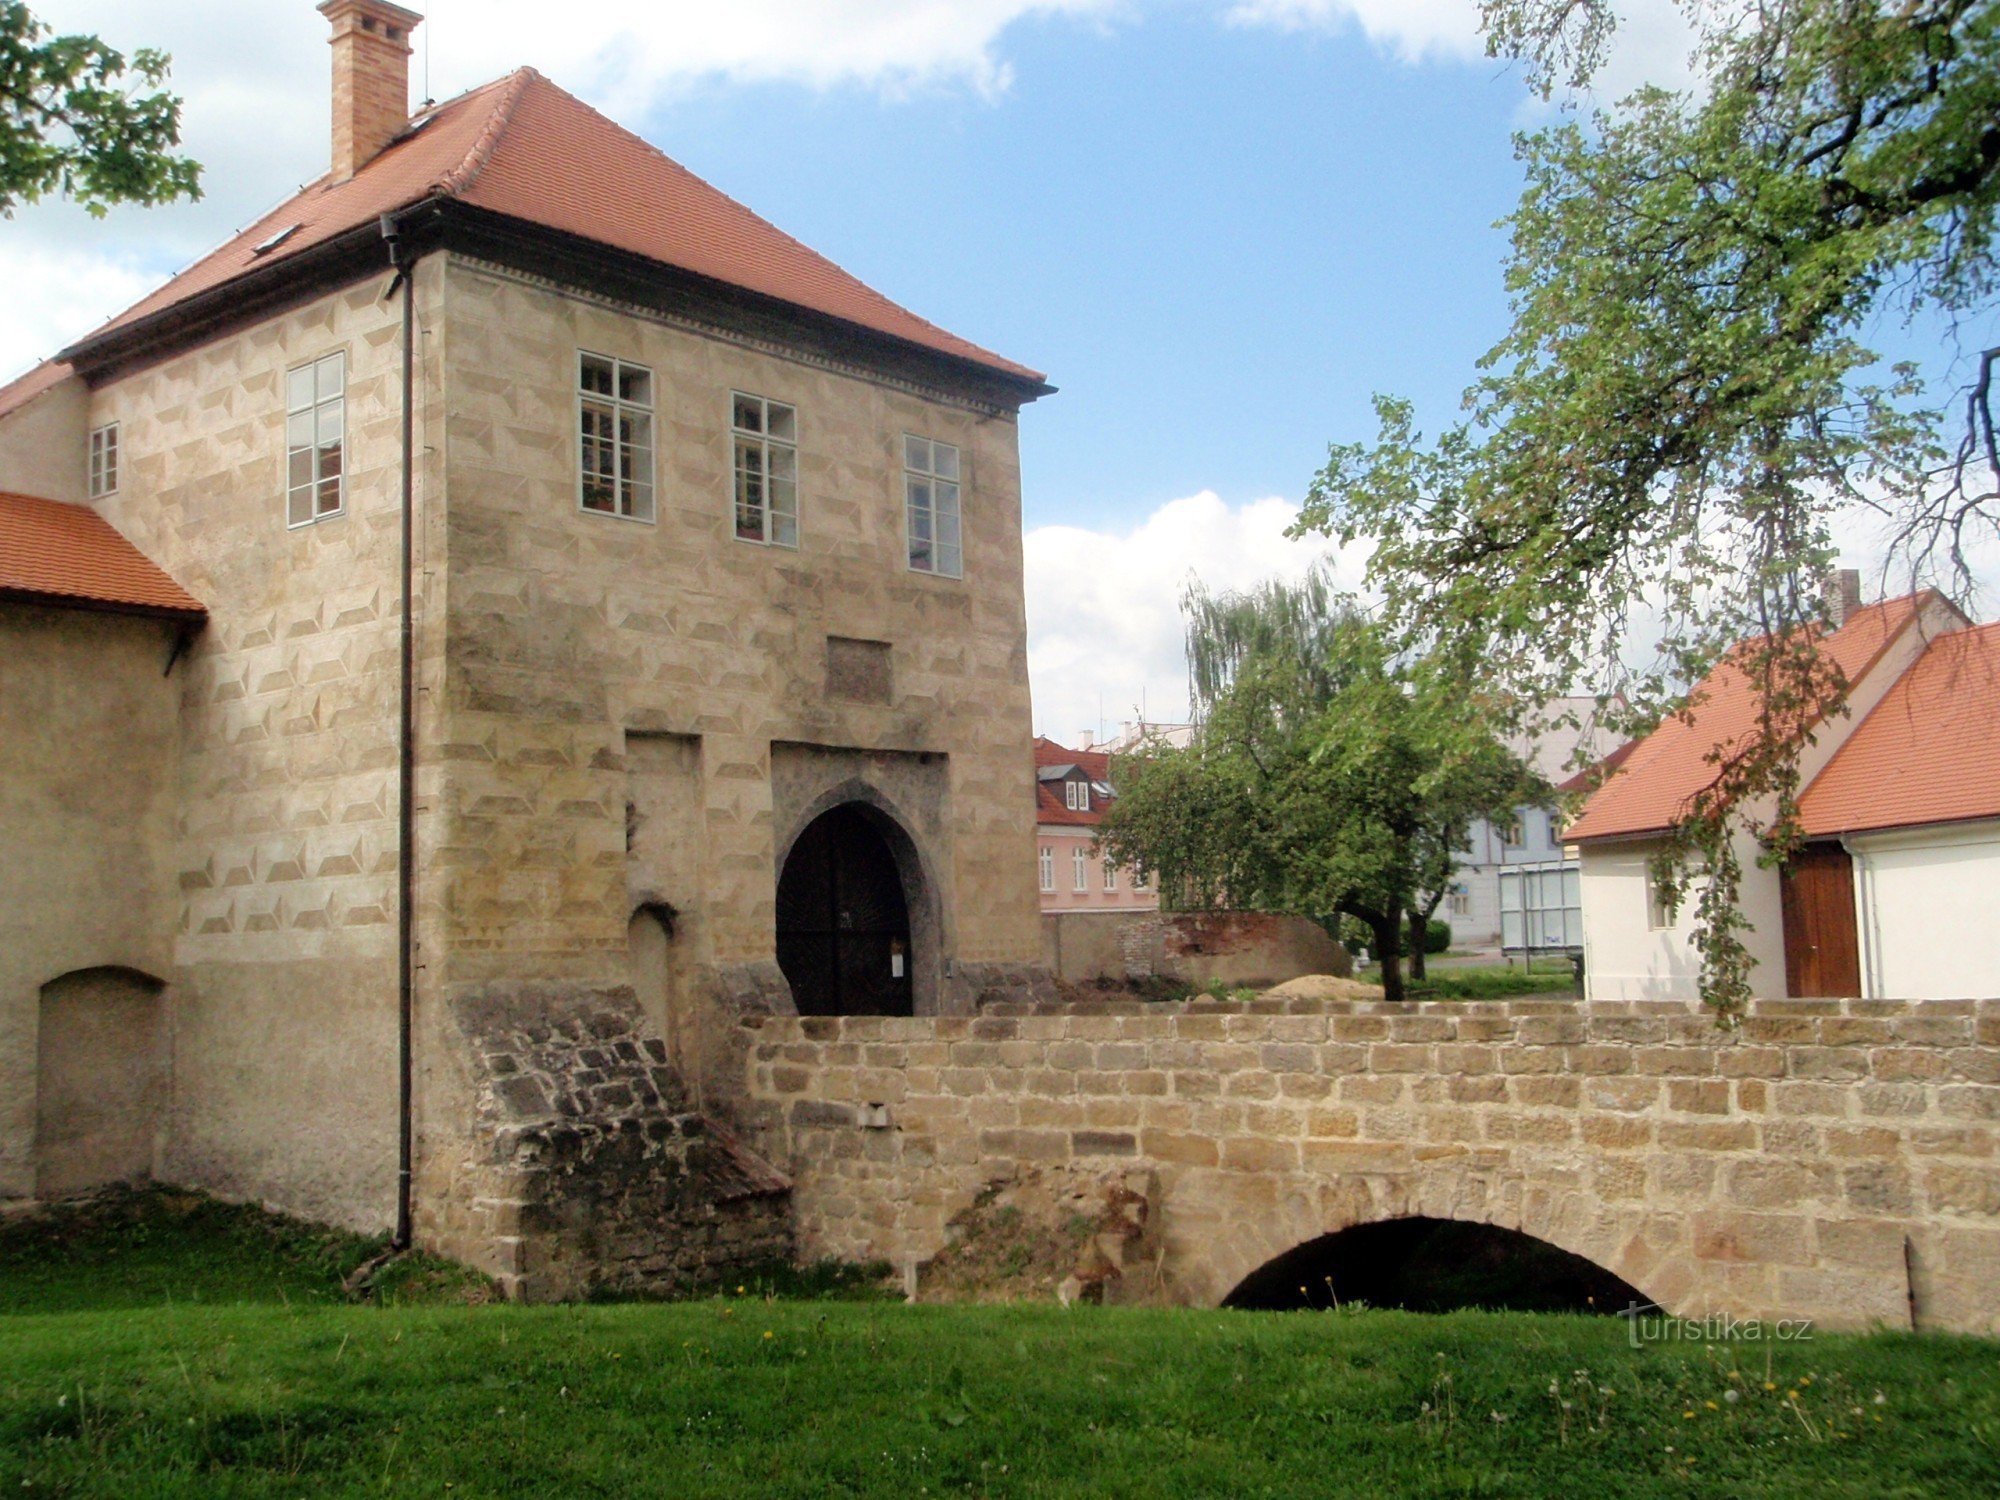 Torre d'ingresso del castello